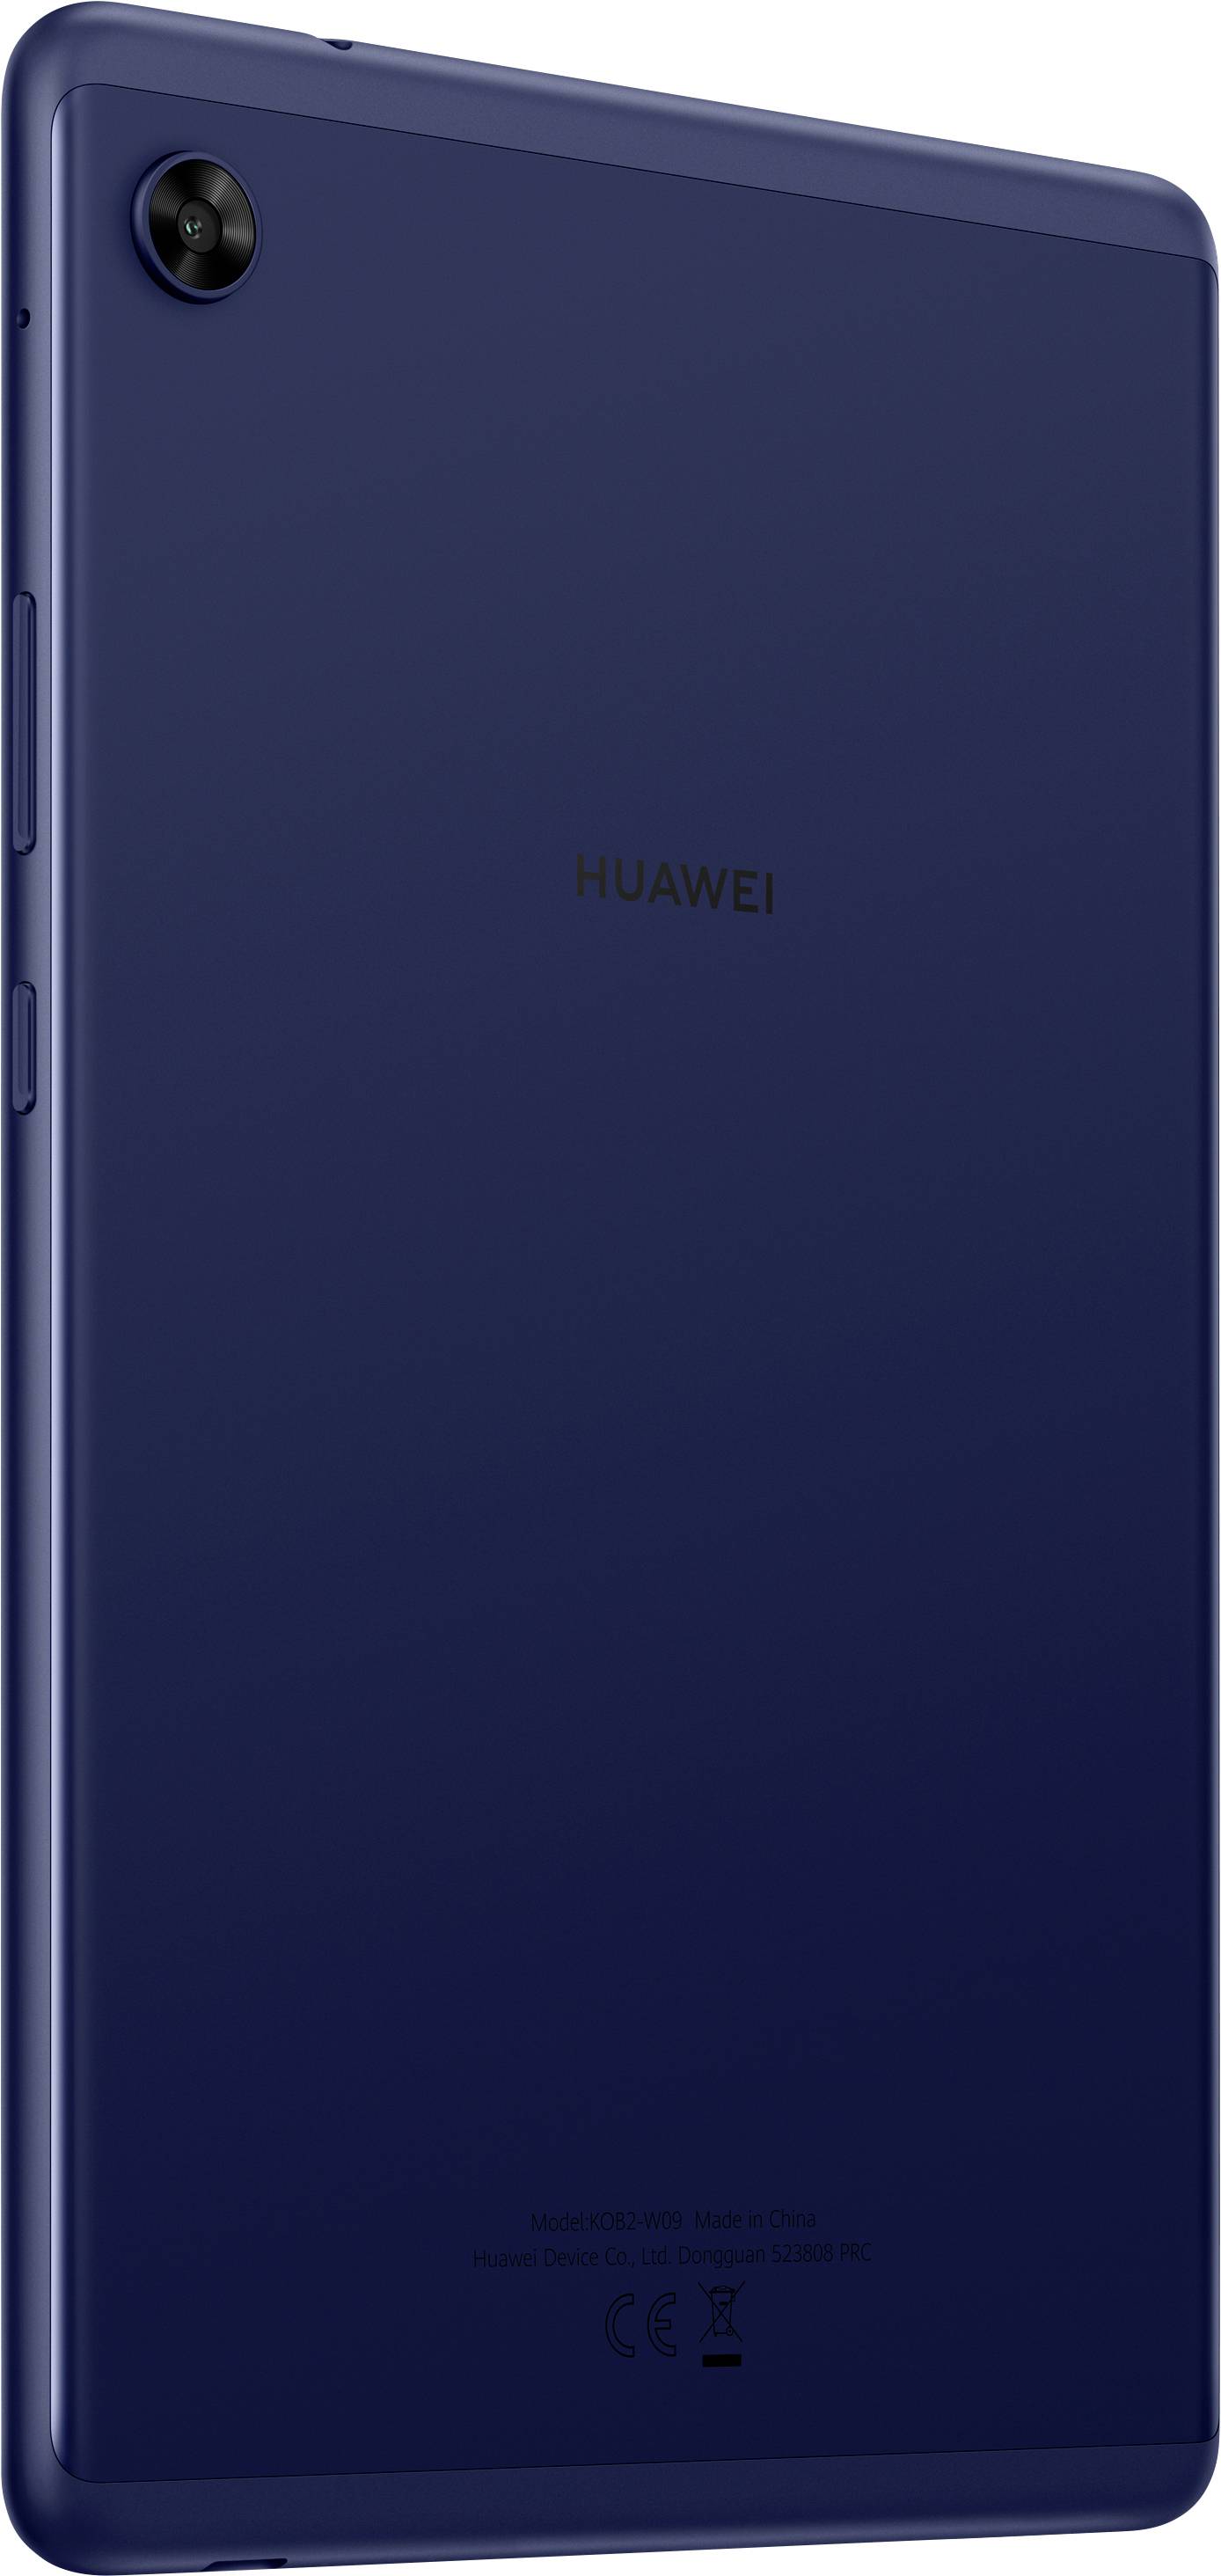 Android-surfplatta HUAWEI MatePad T 8 WiFi 8 tum 16 GB WiFi Djupblå